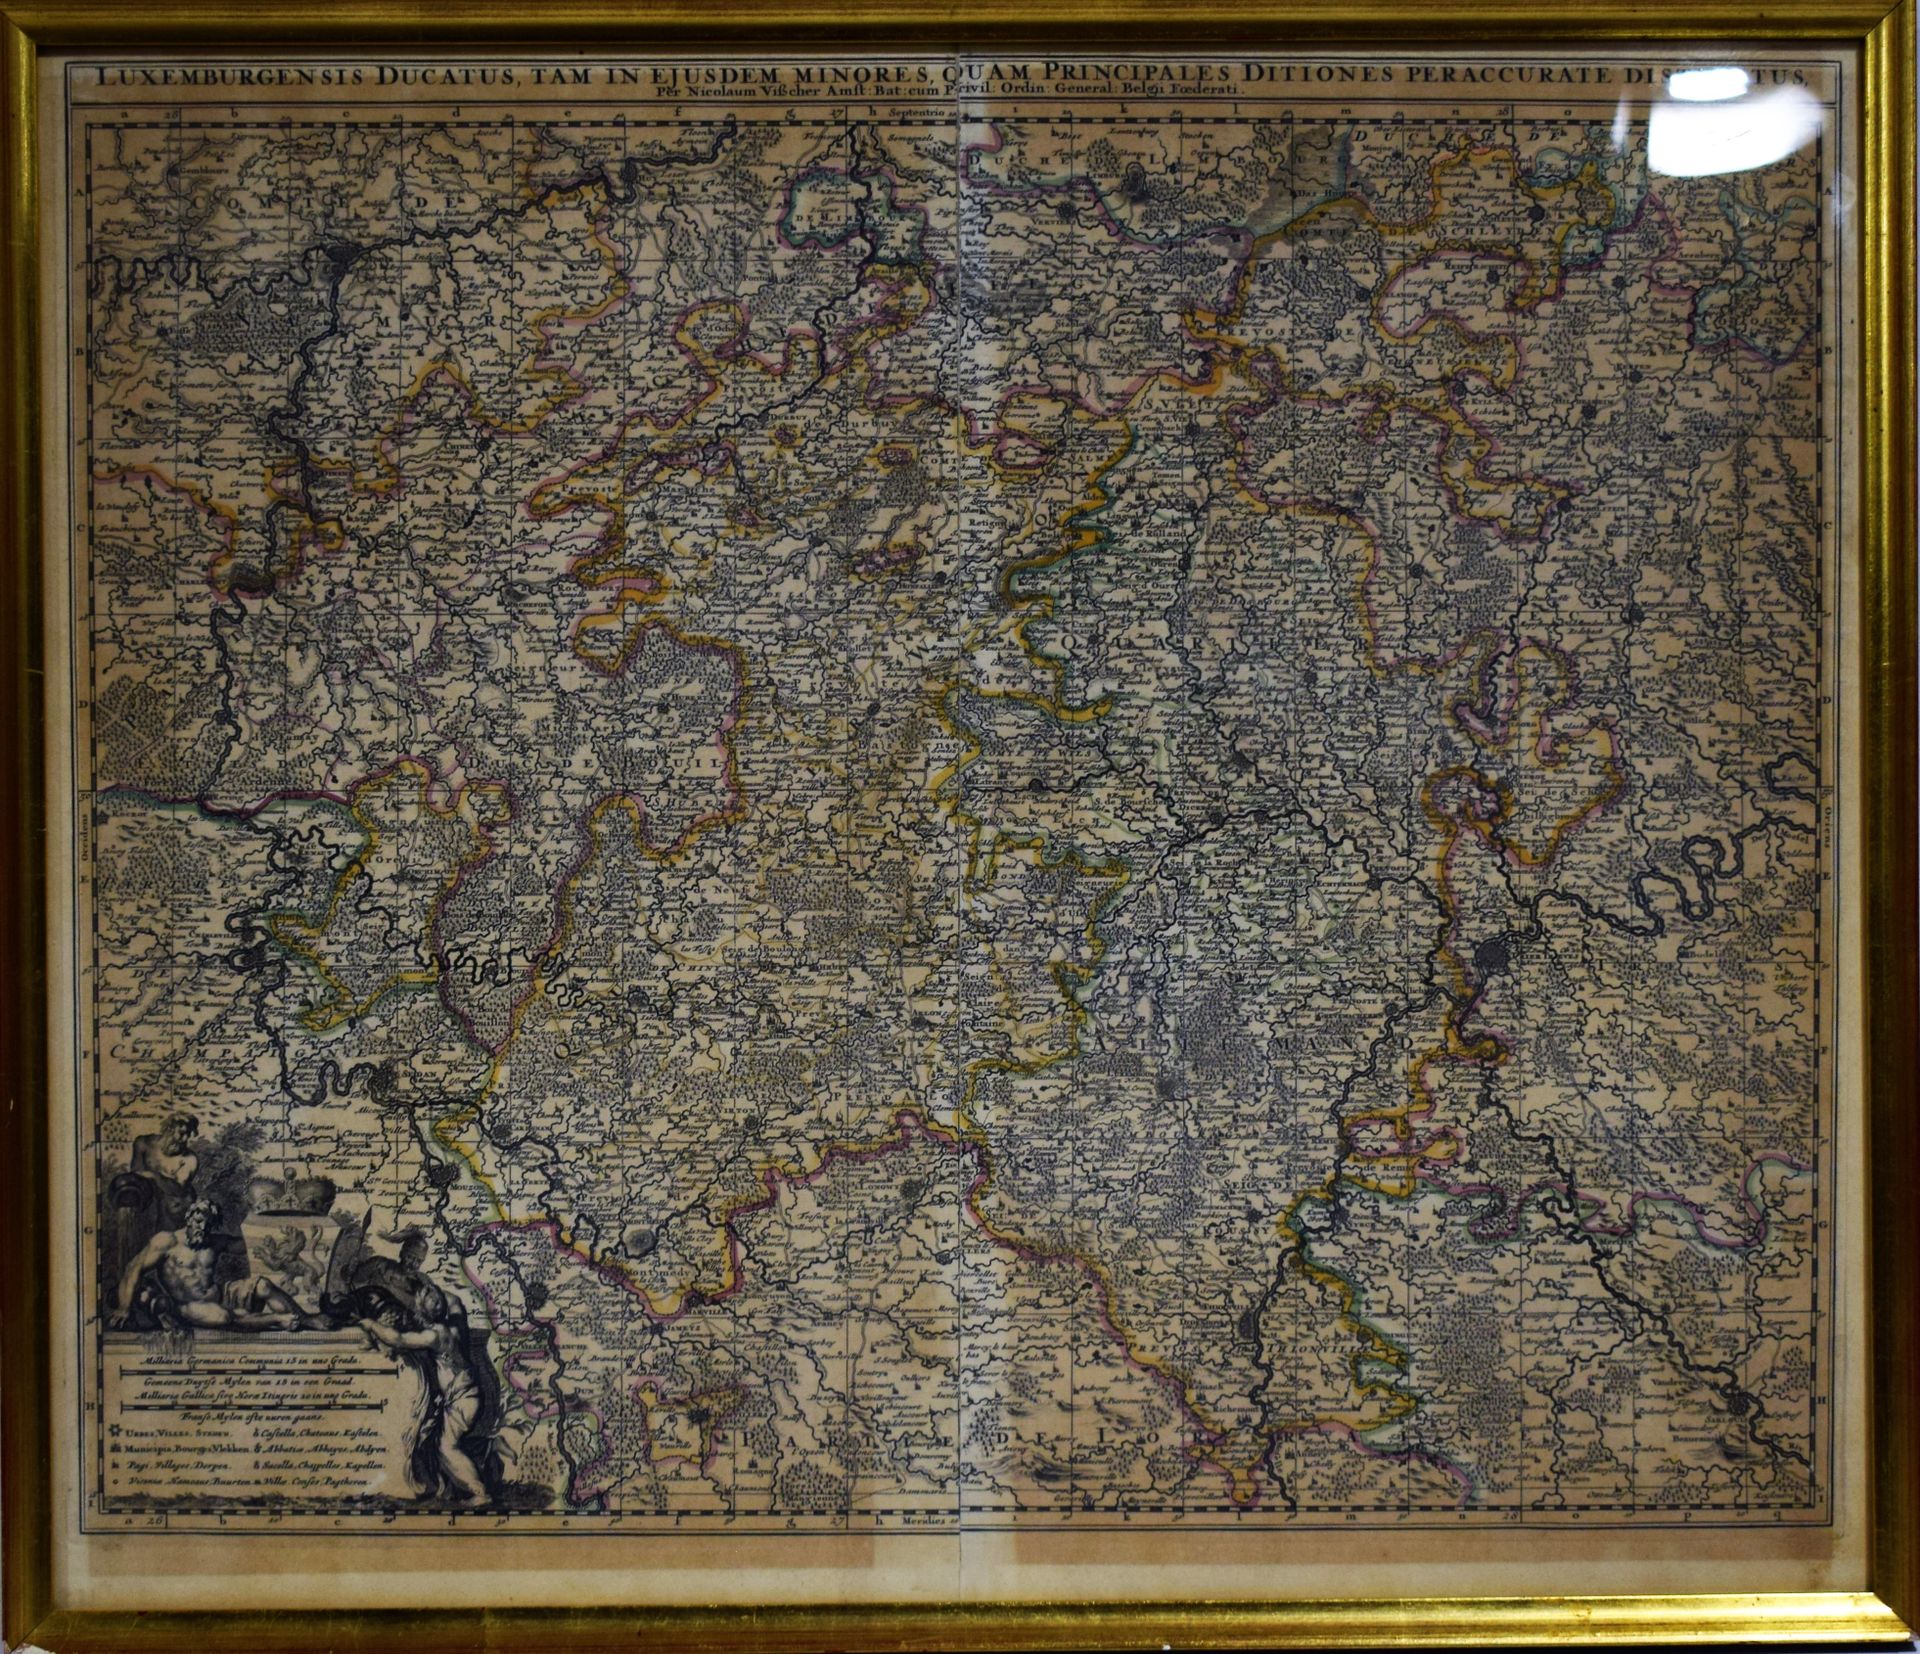 Null (MAPA) Mapa de Luxemburgo "Luxemburgensis ducatus, tam in ejusdem minores (&hellip;